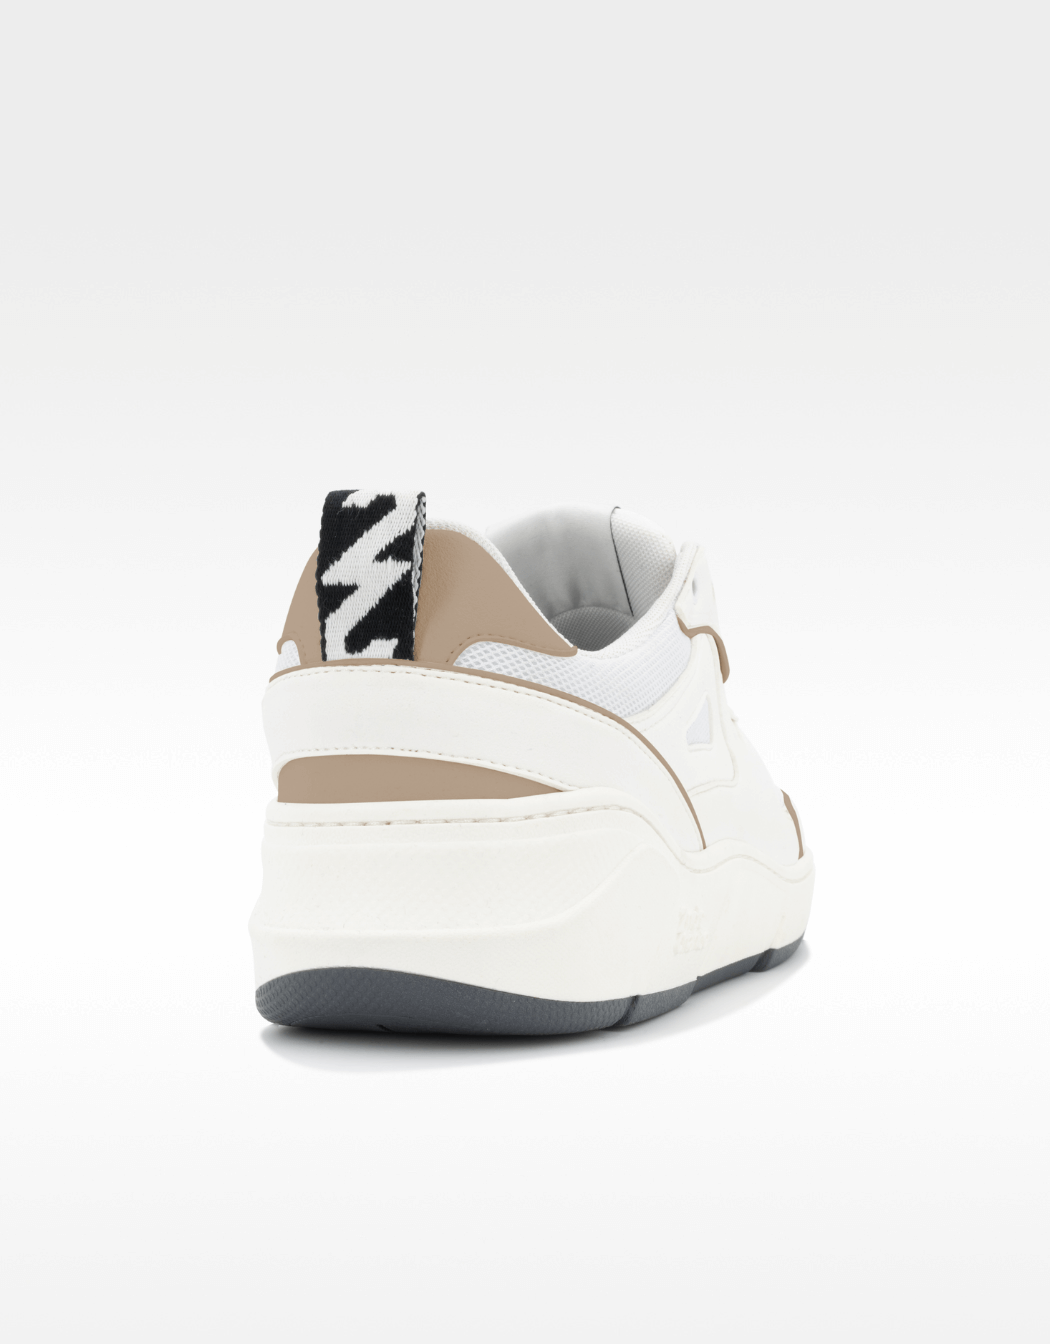 sneakers-2ndechance-basket-madeinfrance-blanc-mastic-35-au-47-arriere-haut-de-gamme